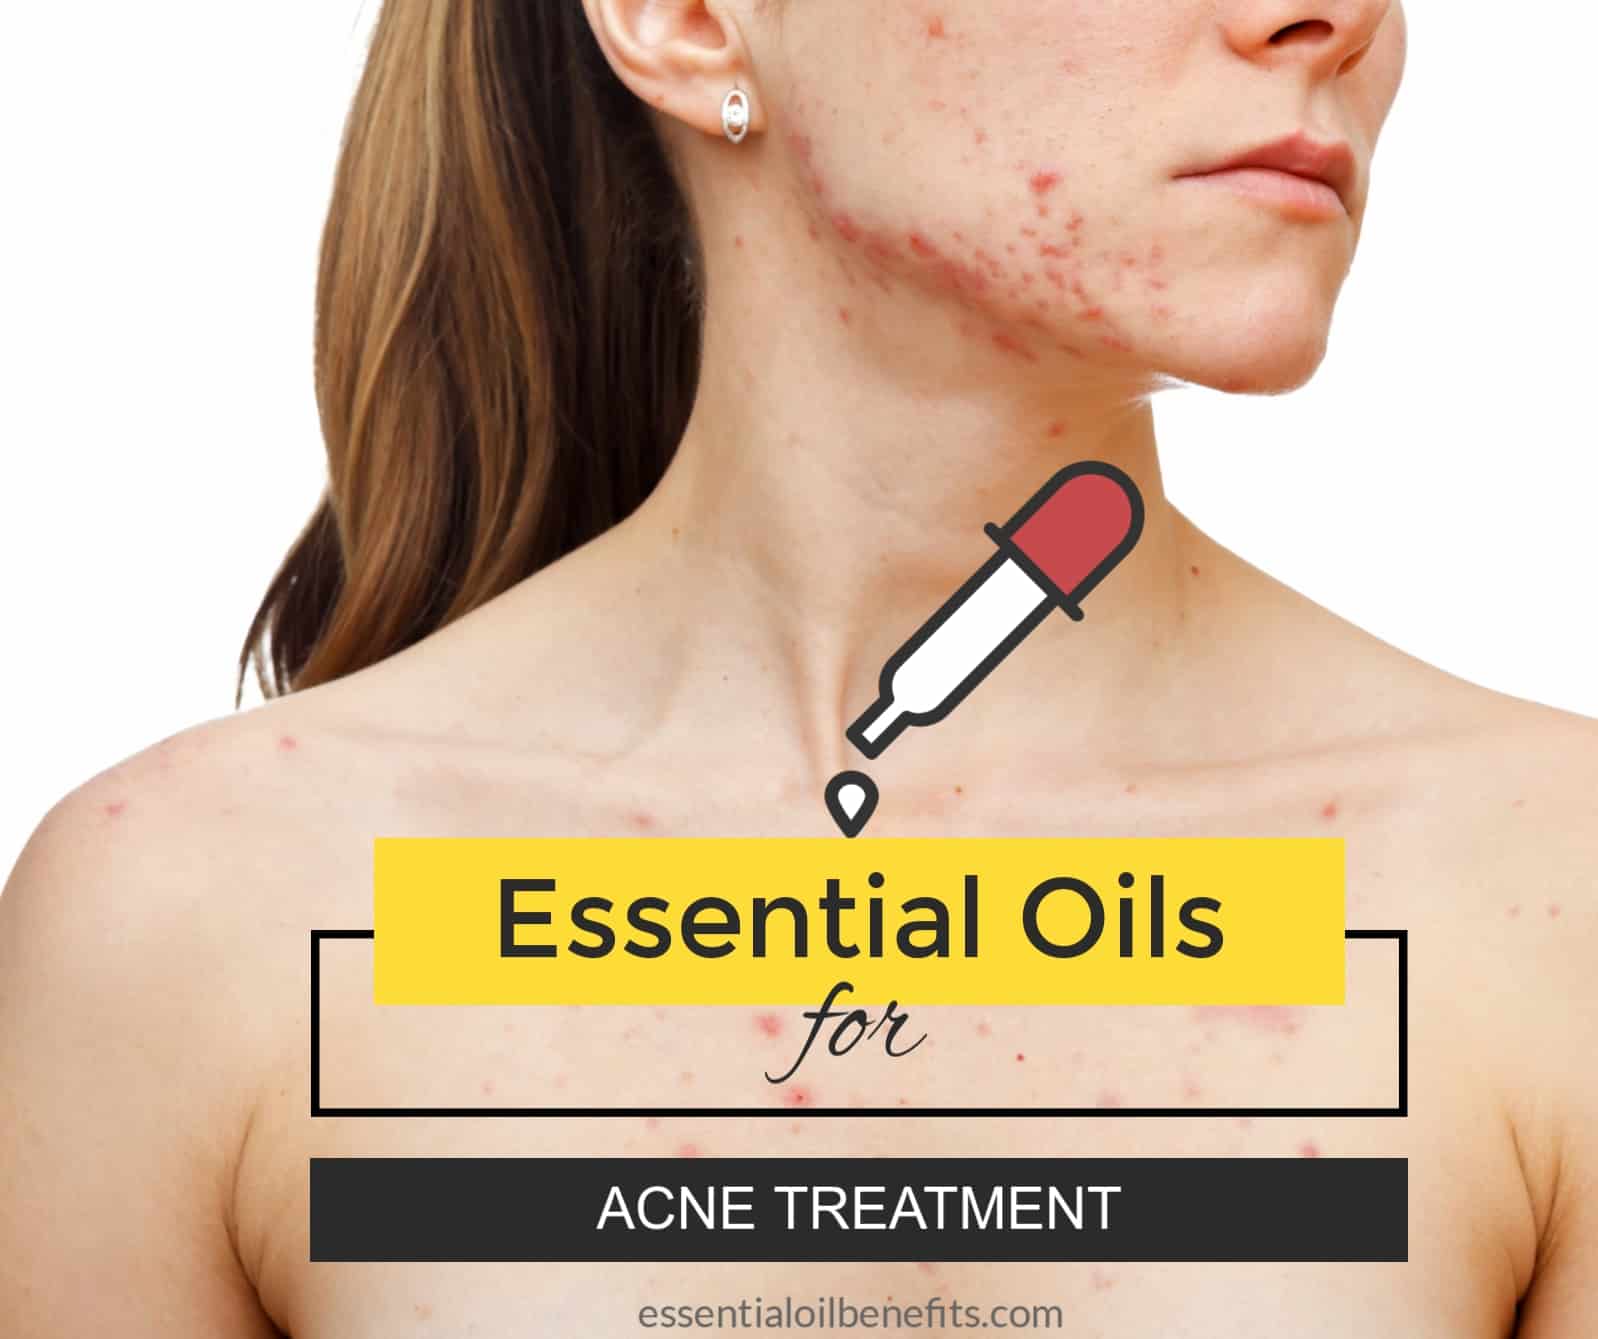 Essential oils for acne treatment